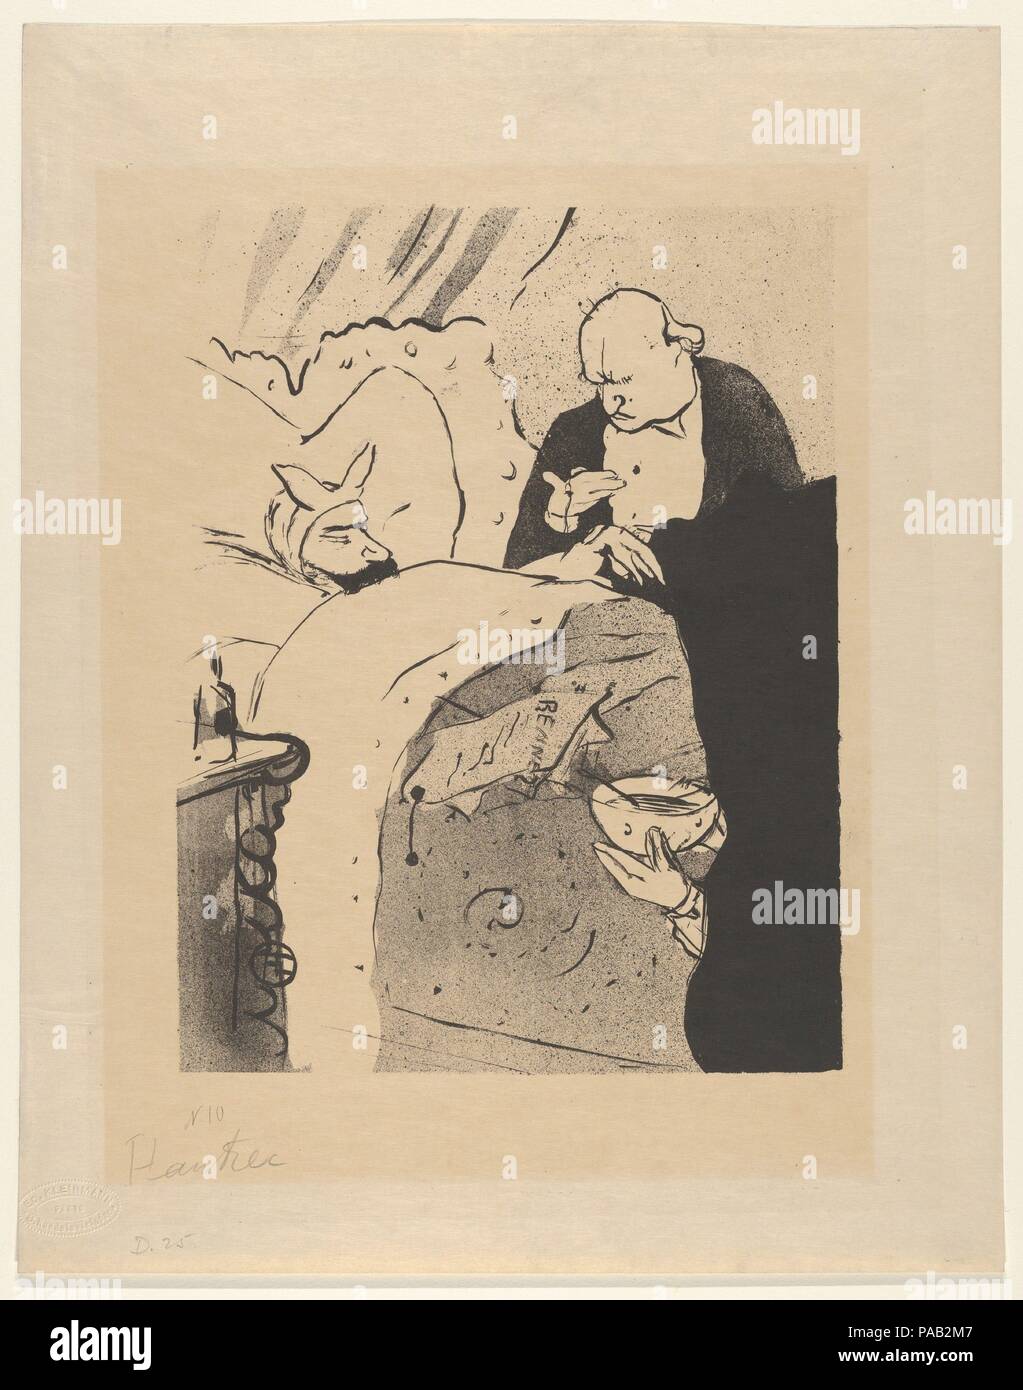 Carnot Is Sick! (from Les Vieilles Histoires). Artist: Henri de Toulouse-Lautrec (French, Albi 1864-1901 Saint-André-du-Bois). Dimensions: Sheet: 13 11/16 × 10 13/16 in. (34.7 × 27.5 cm)  Image: 9 5/8 × 7 5/16 in. (24.4 × 18.6 cm). Publisher: Edouard Kleinmann (French, active 19th century). Series/Portfolio: Les Vieilles Histories (The Old Tales). Date: 1893. Museum: Metropolitan Museum of Art, New York, USA. Stock Photo